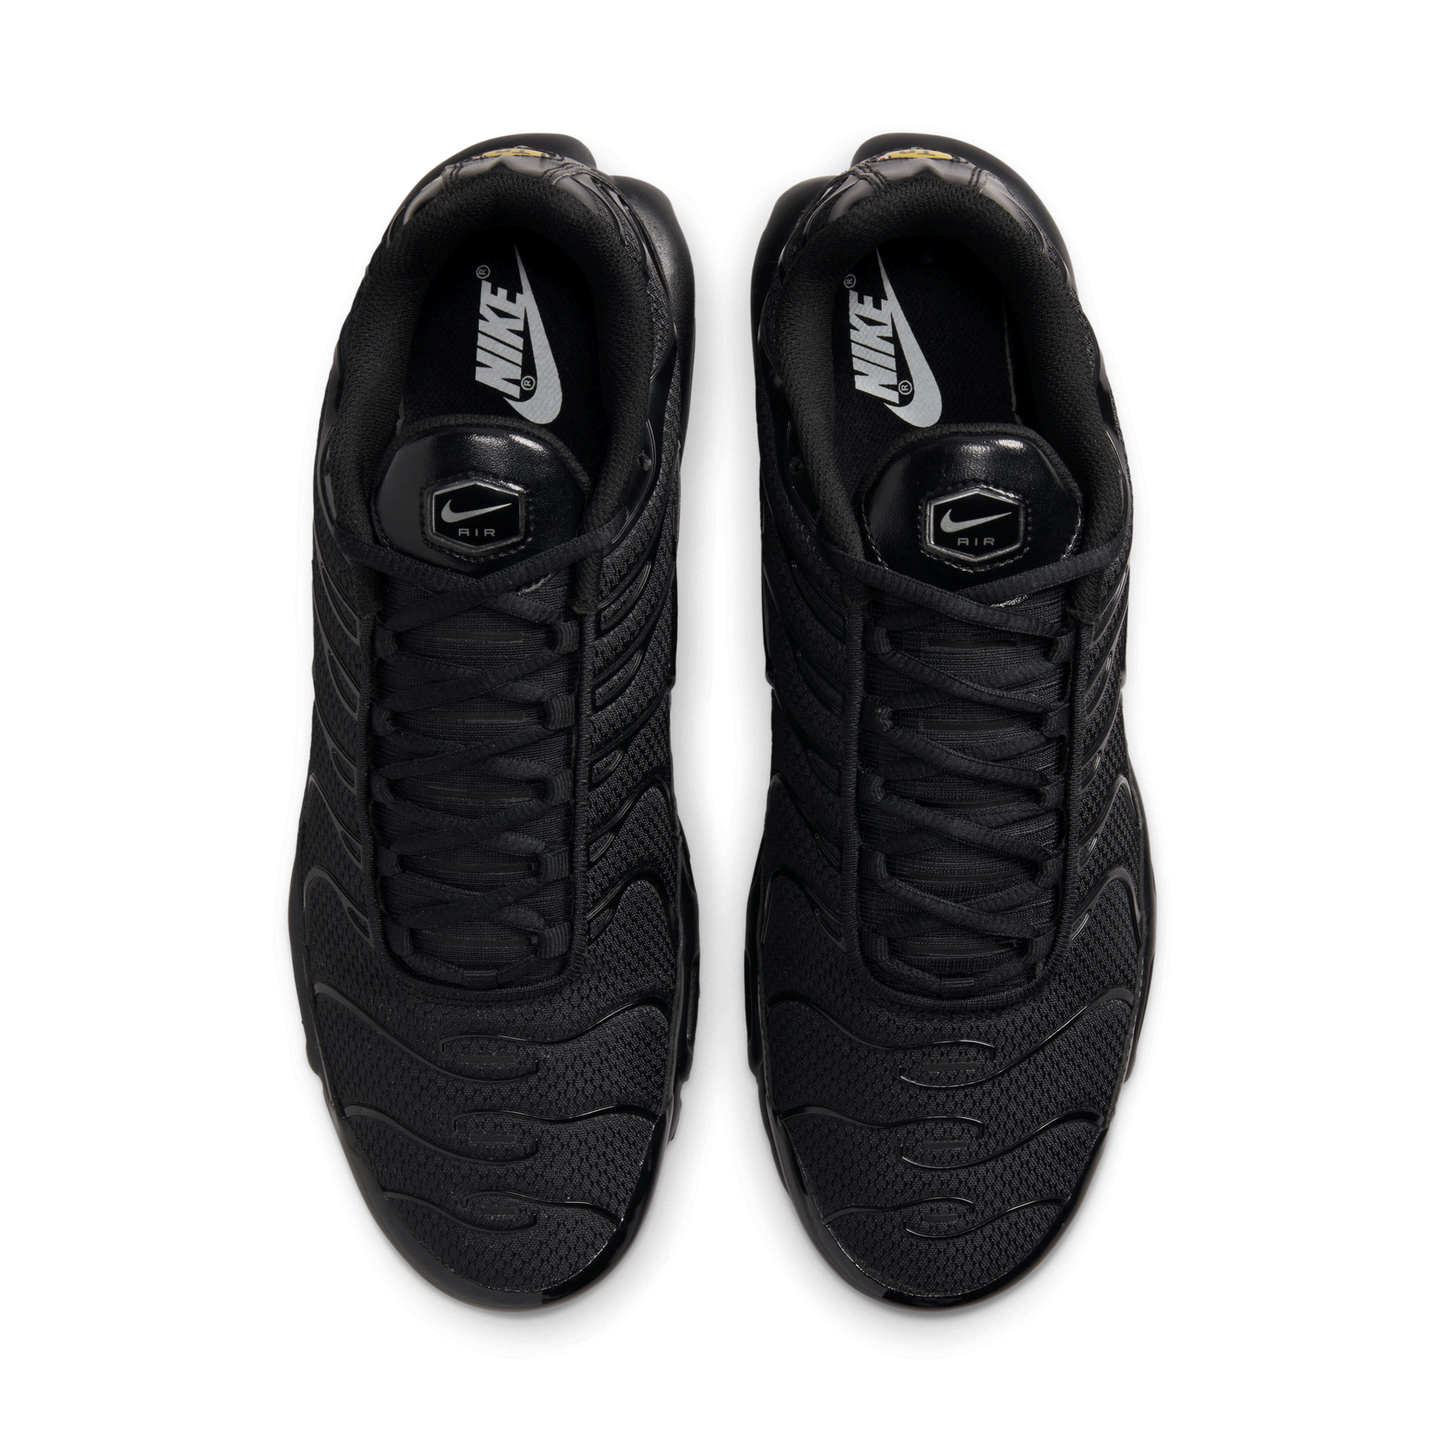 Nike Air Max Plus "Black"